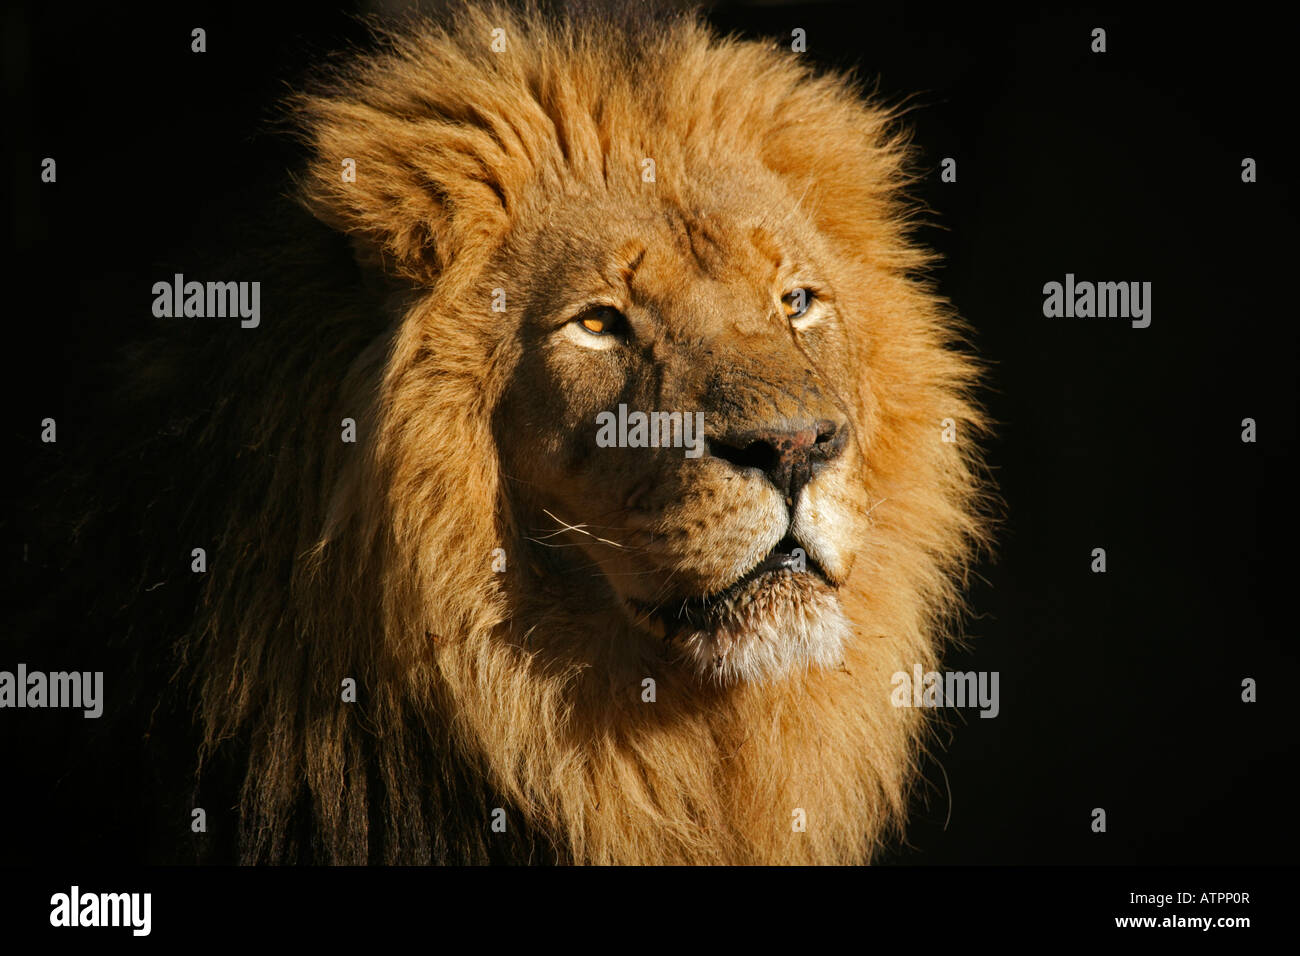 Retrato de un gran macho león africano (Panthera leo), contra un fondo negro, Sudáfrica Foto de stock